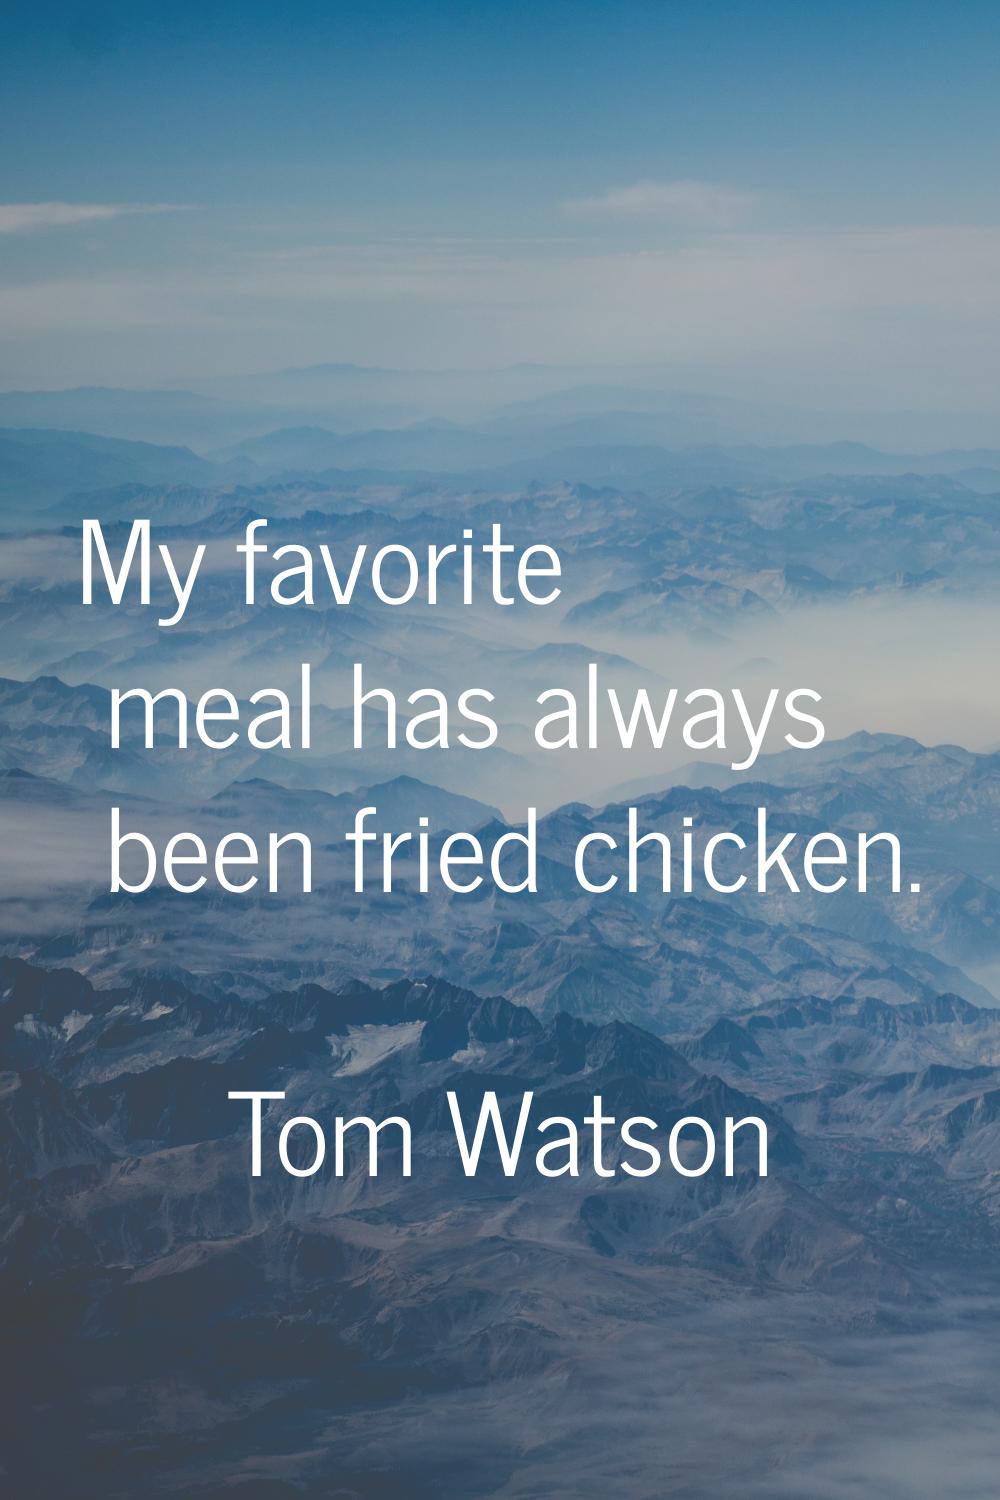 My favorite meal has always been fried chicken.